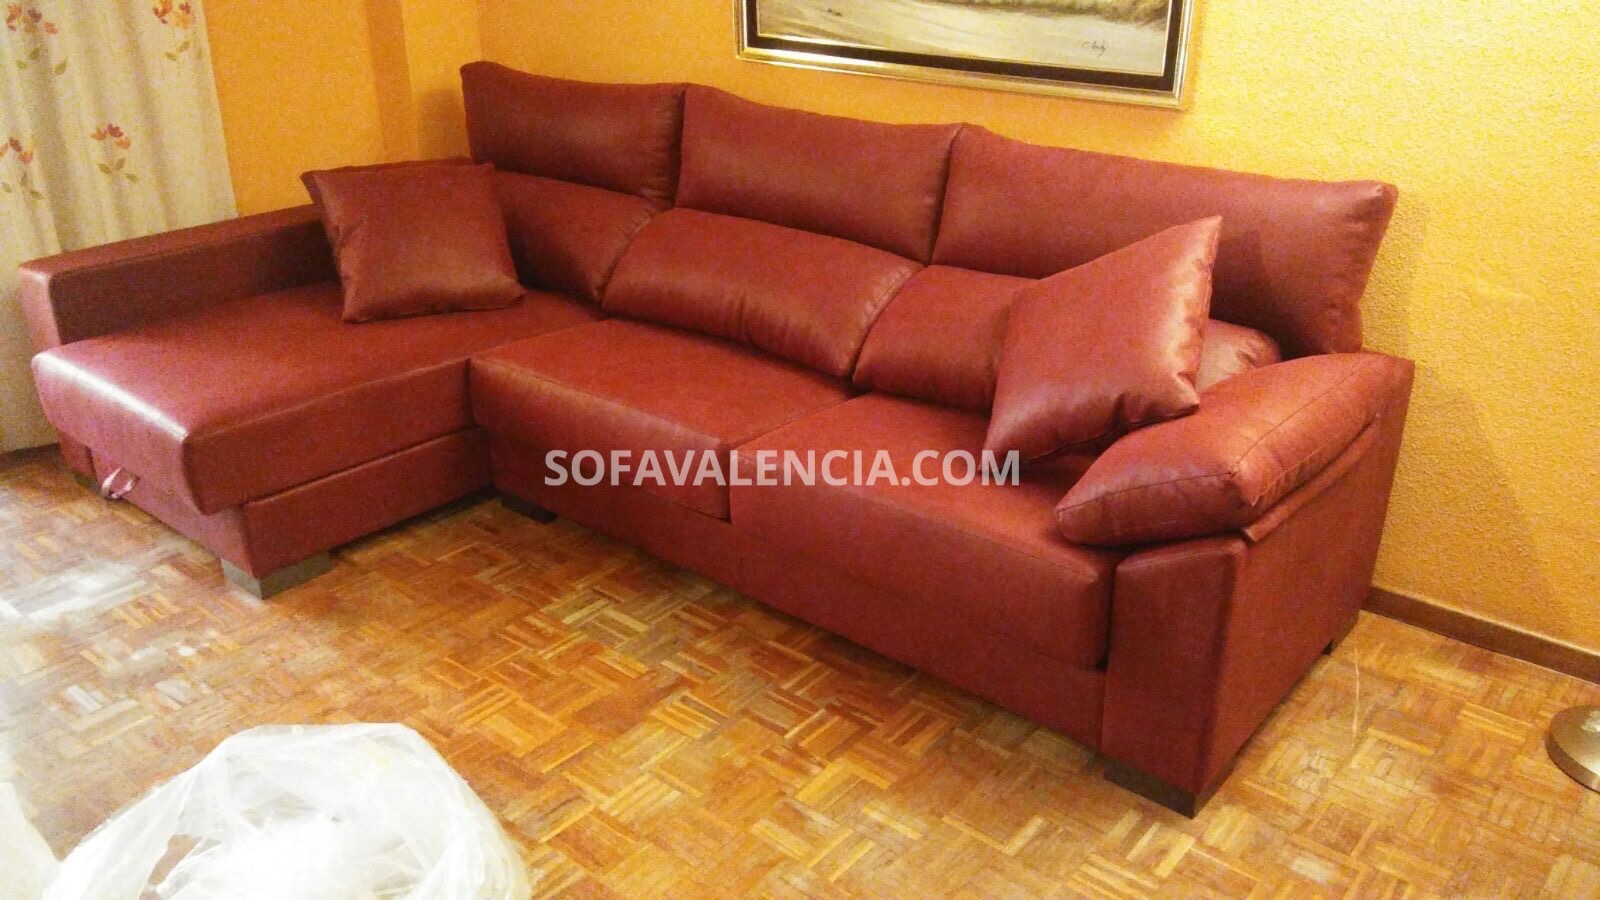 sofa-valencia-fotos-clientes-63